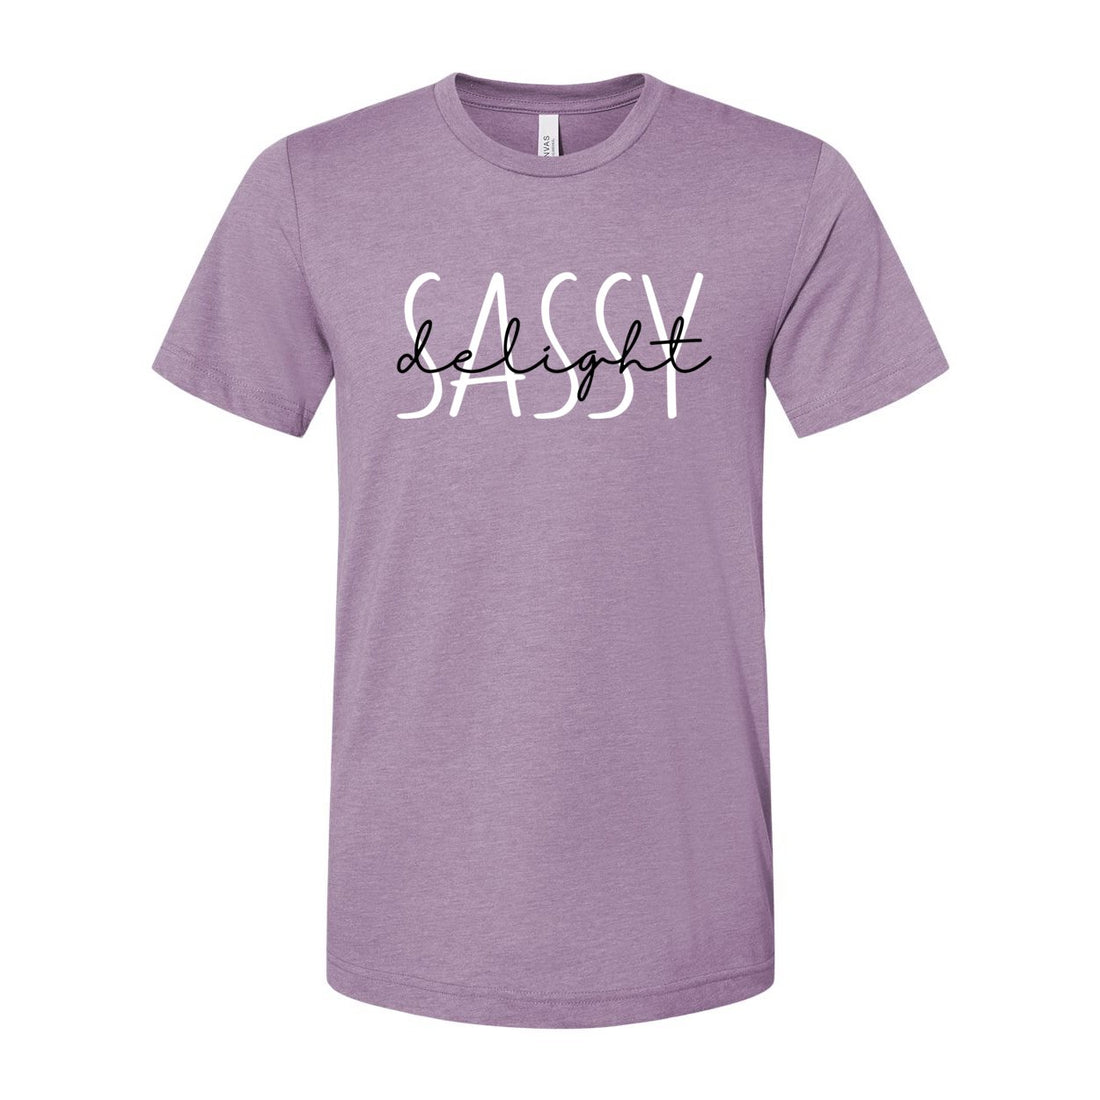 Sassy Delight Short Sleeve Jersey Tee - T-Shirts - Positively Sassy - Sassy Delight Short Sleeve Jersey Tee